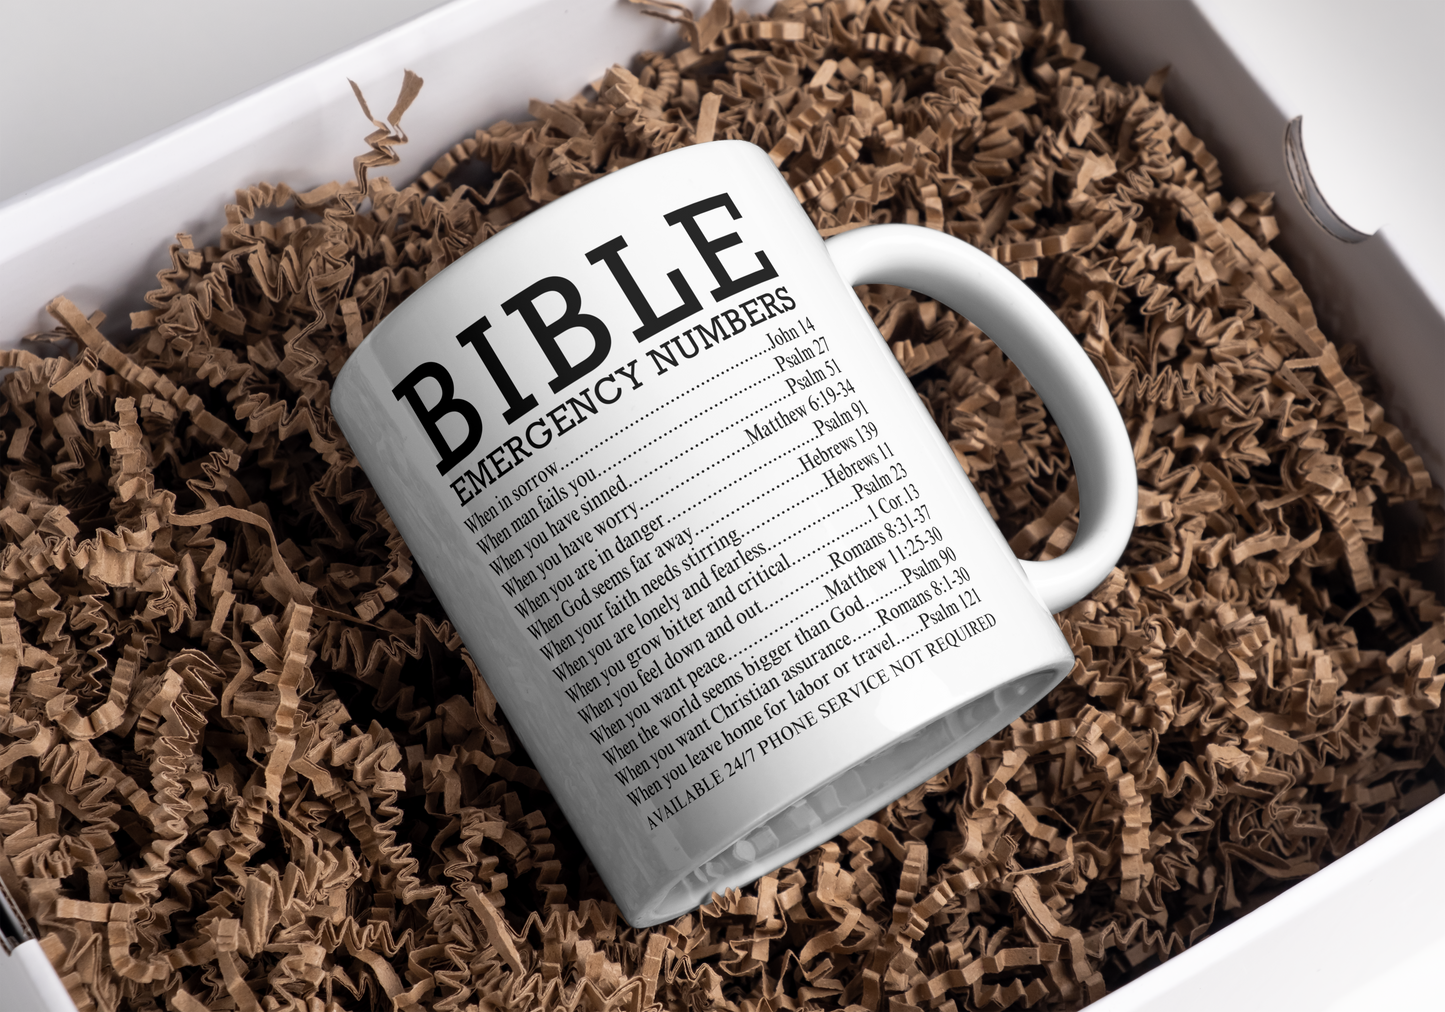 Bible Emergency Numbers Mug